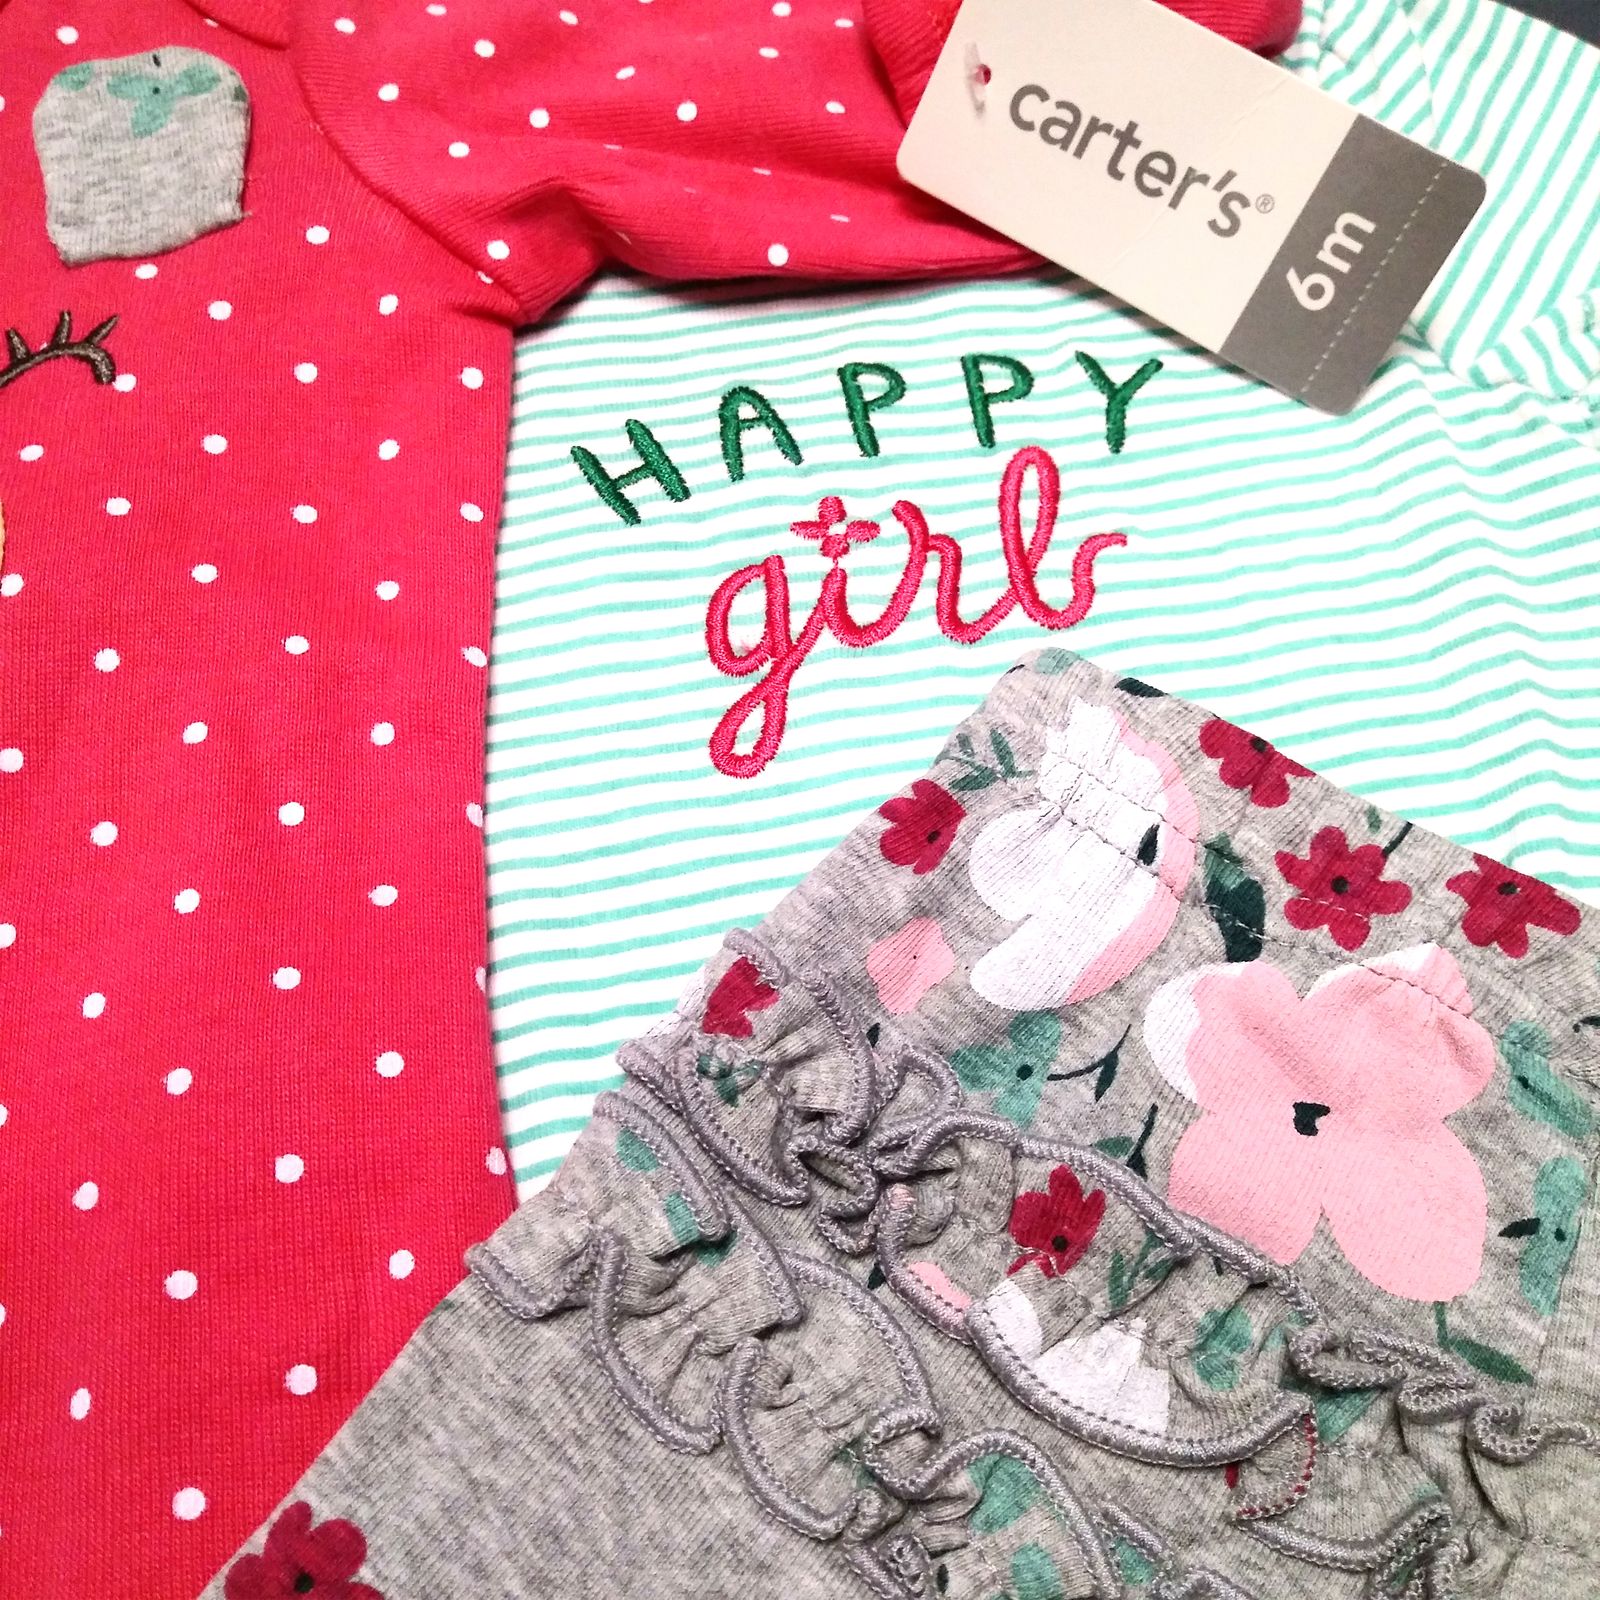 ست 3 تکه لباس نوزادی کارترز طرح Happy Girl کد M559 -  - 5